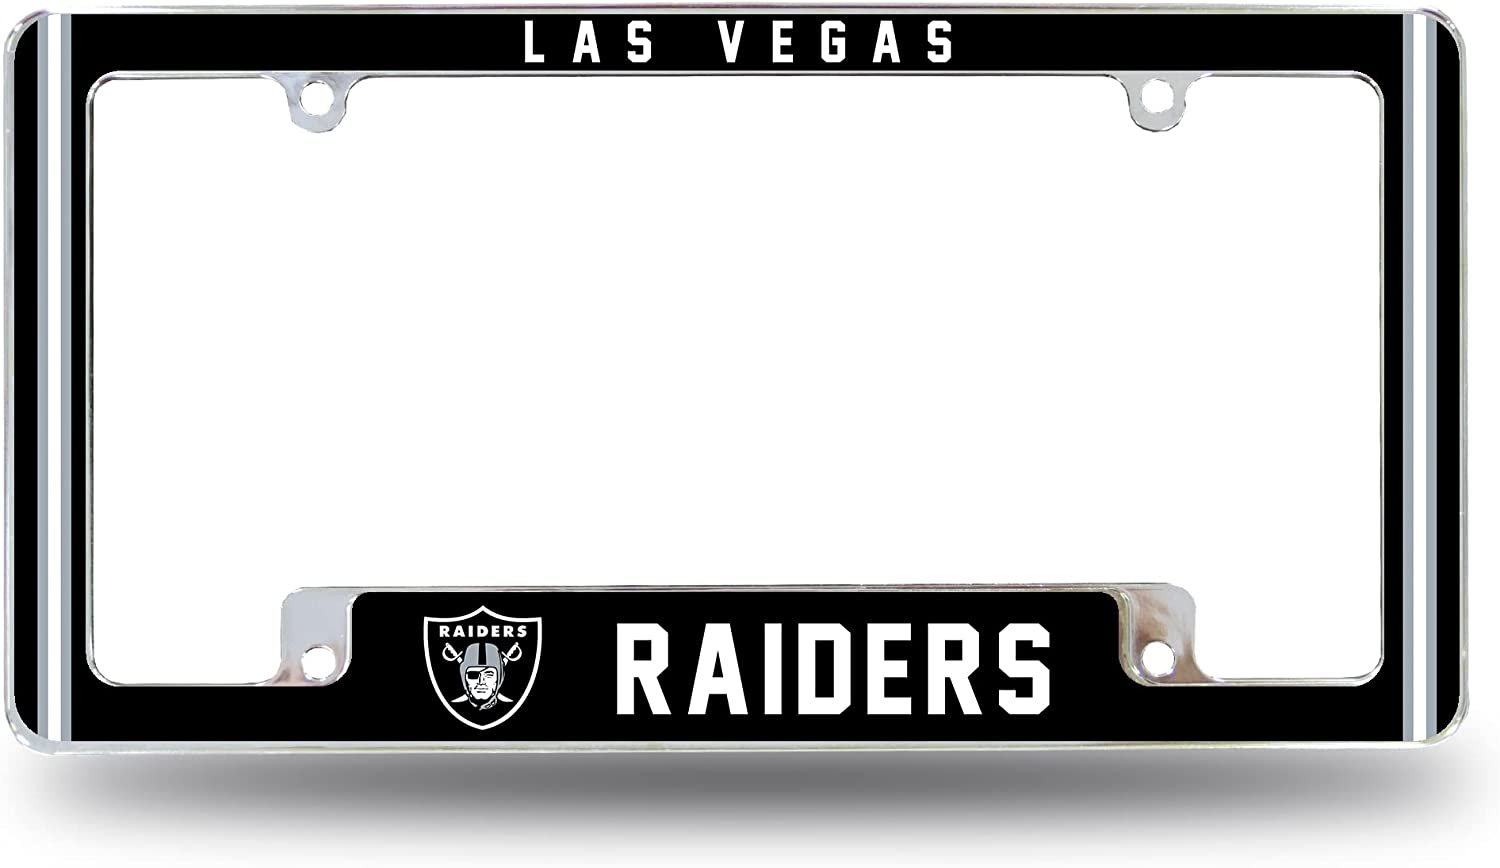 Las Vegas Raiders Metal License Plate Frame Chrome Tag Cover Alternate Design 6x12 Inch